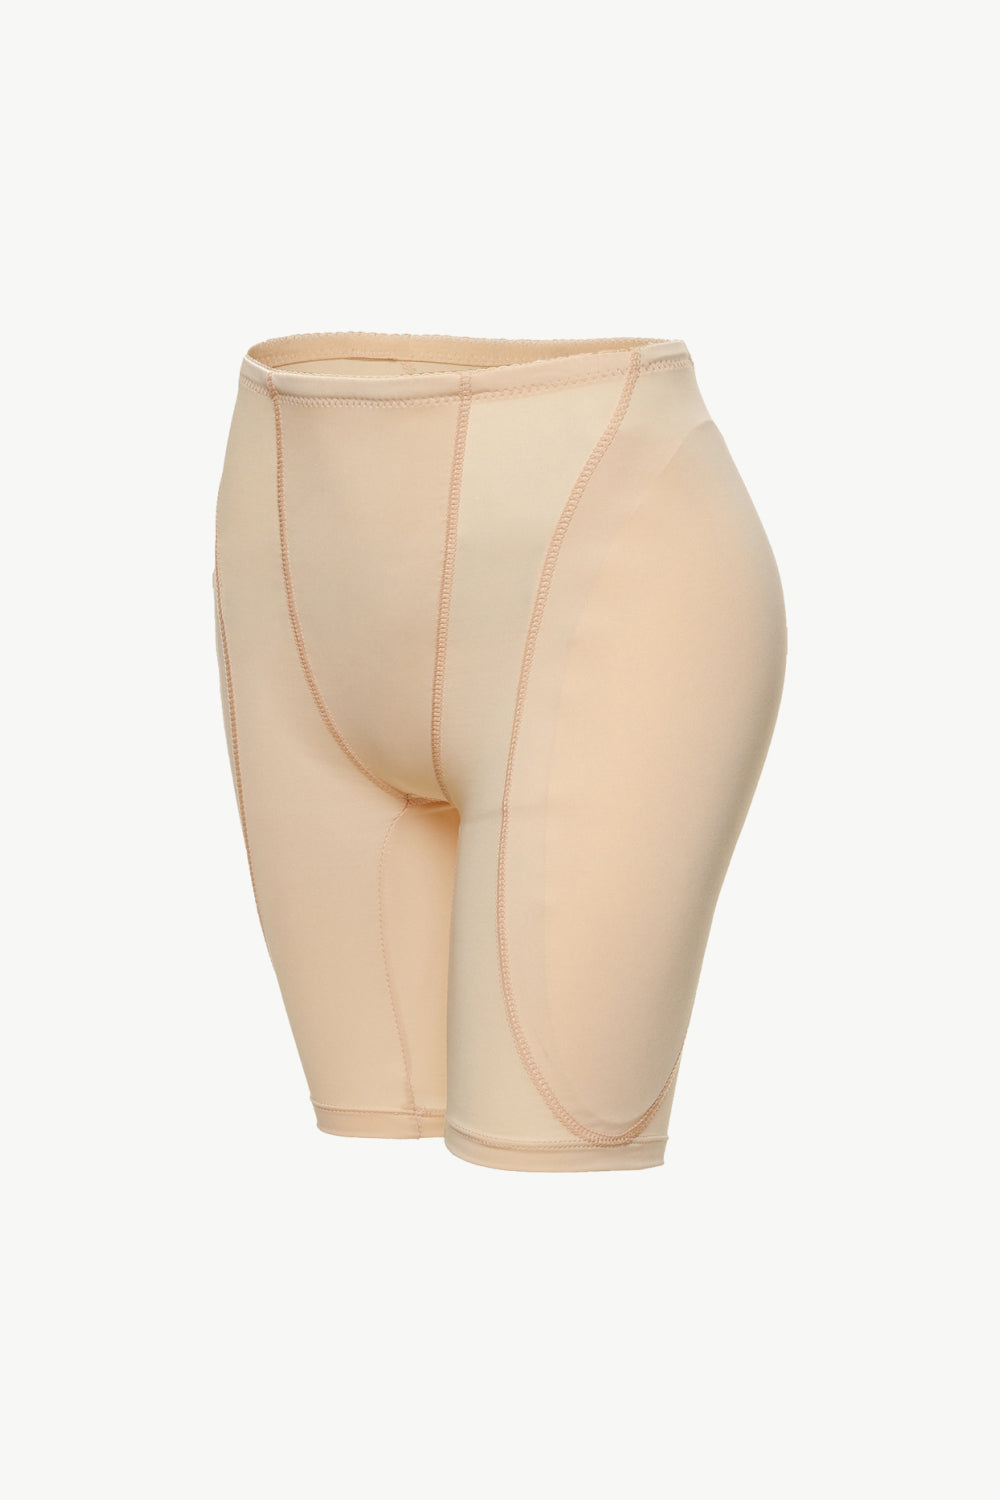 High Waist Butt Hip Lifting Body Shaping Shorts (S-6XL)